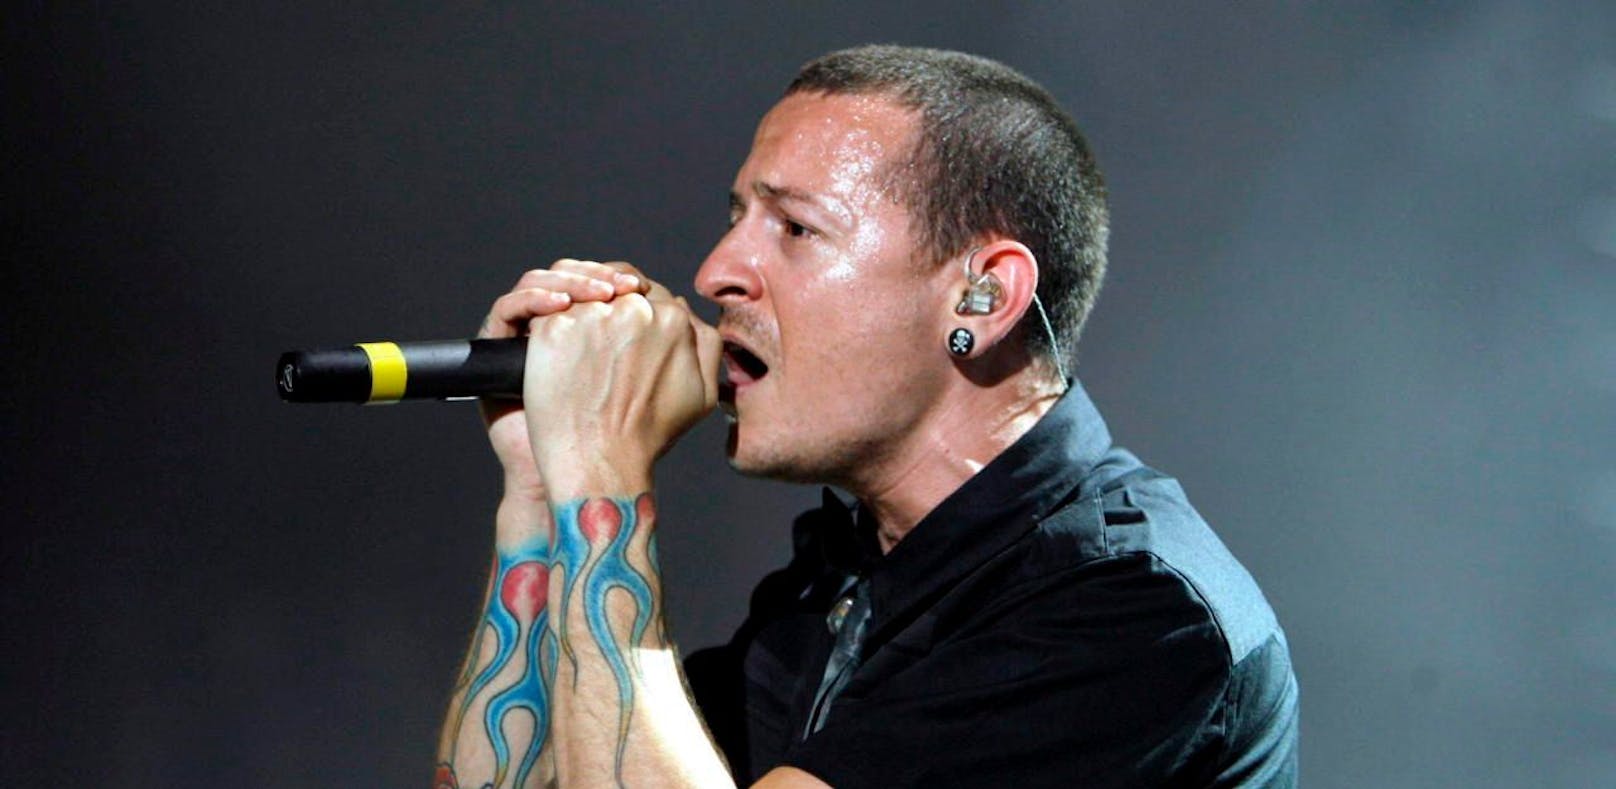 Linkin Park-Sänger Chester Bennington ist tot